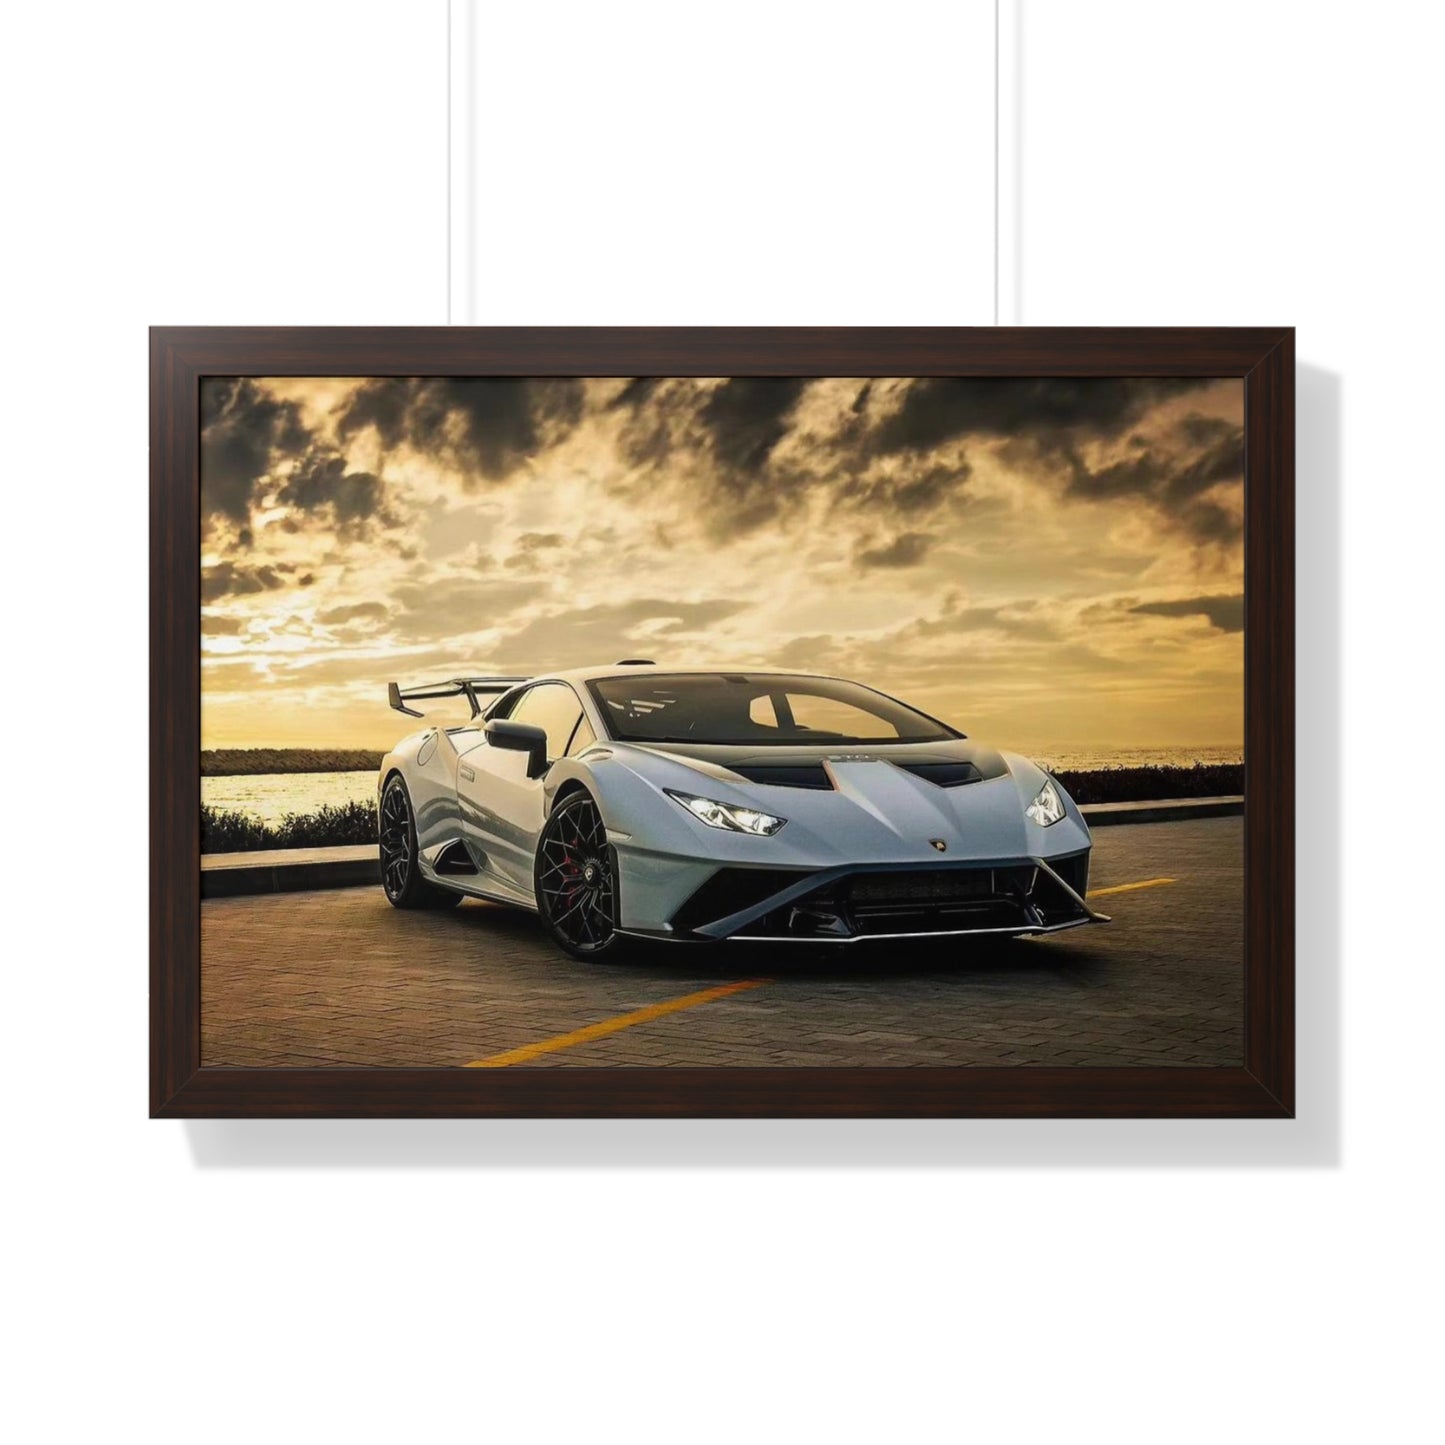 "Cloudy Skies" 30" x 20" Framed Lamborghini Poster